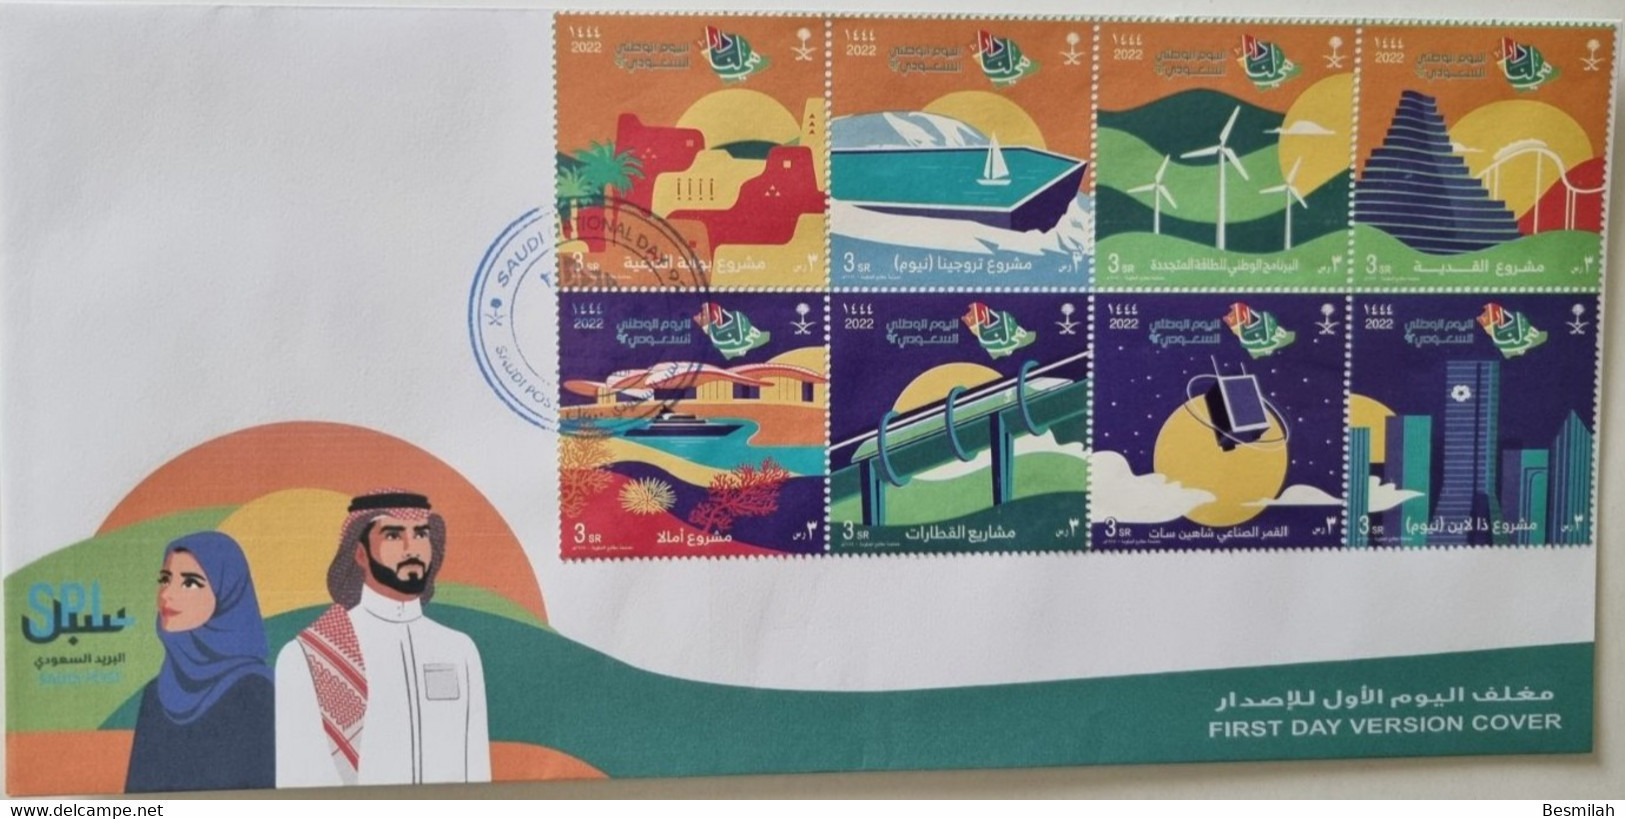 Saudi Arabia Stamp 92 National Day 2022 (1444 Hijry) 16 Pieces Of 3 Riyals + Card + Post Card Plus FDVC For Both - Saudi-Arabien